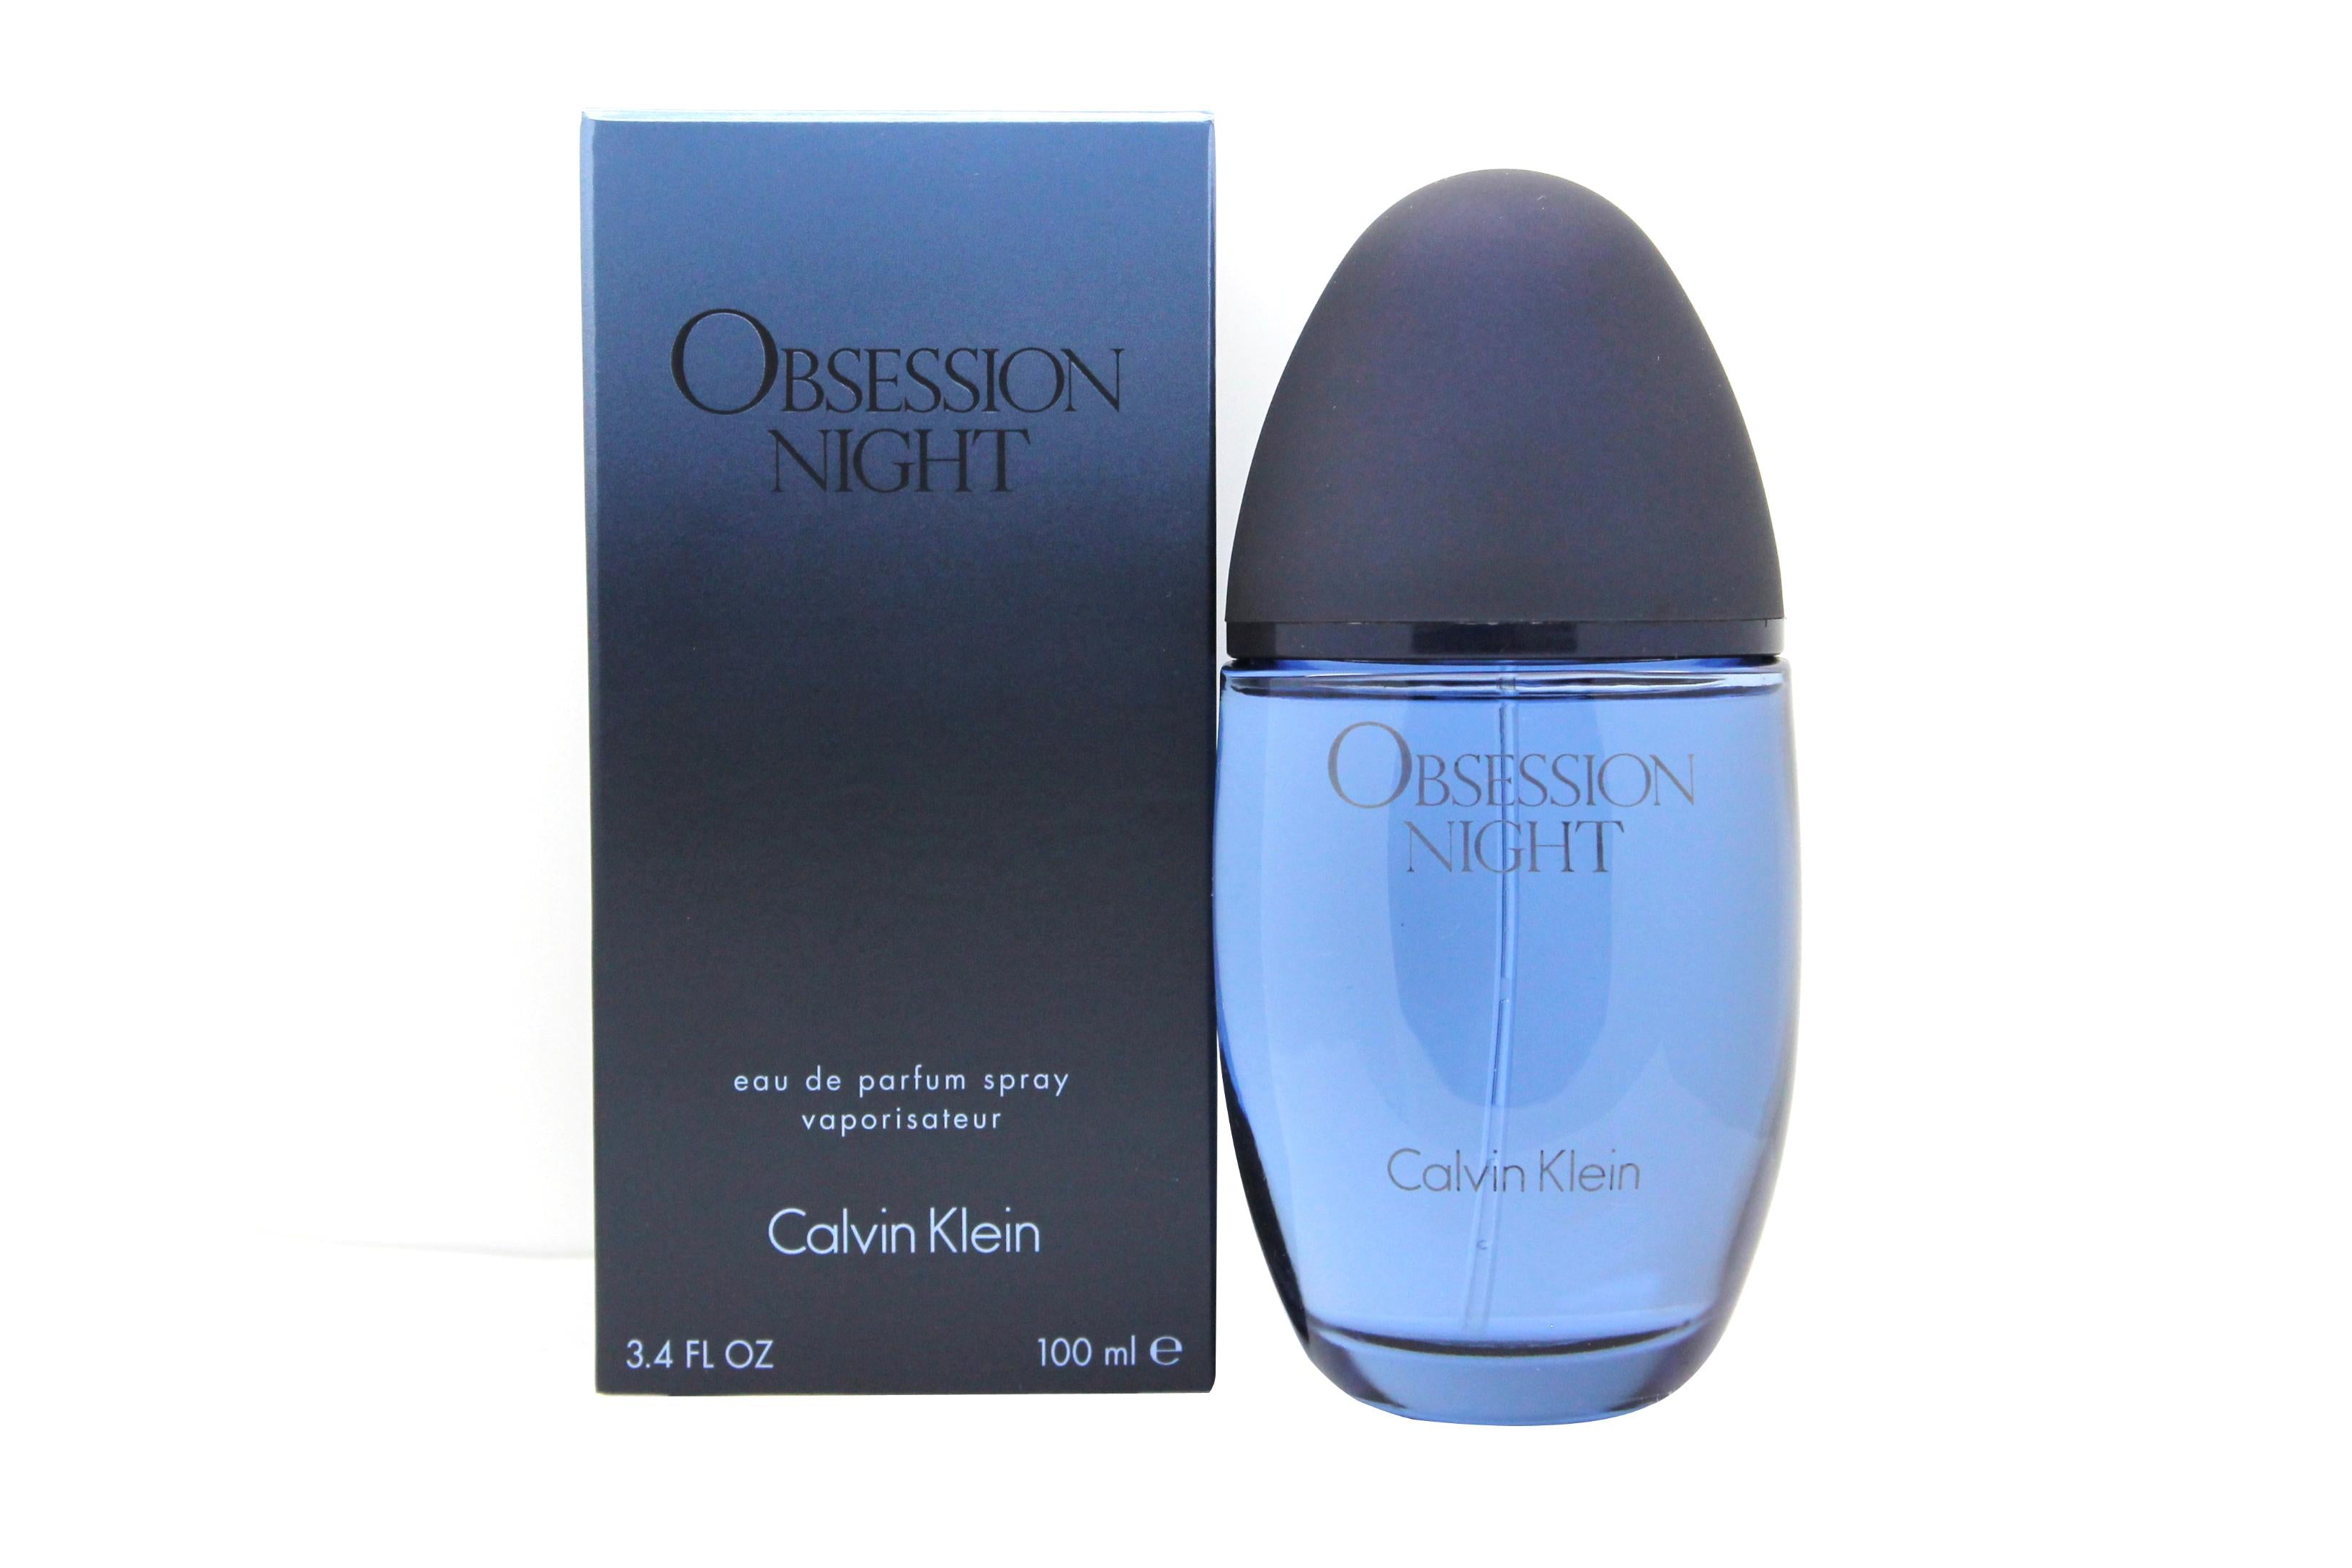 View Calvin Klein Obsession Night Eau de Parfum 100ml Spray information